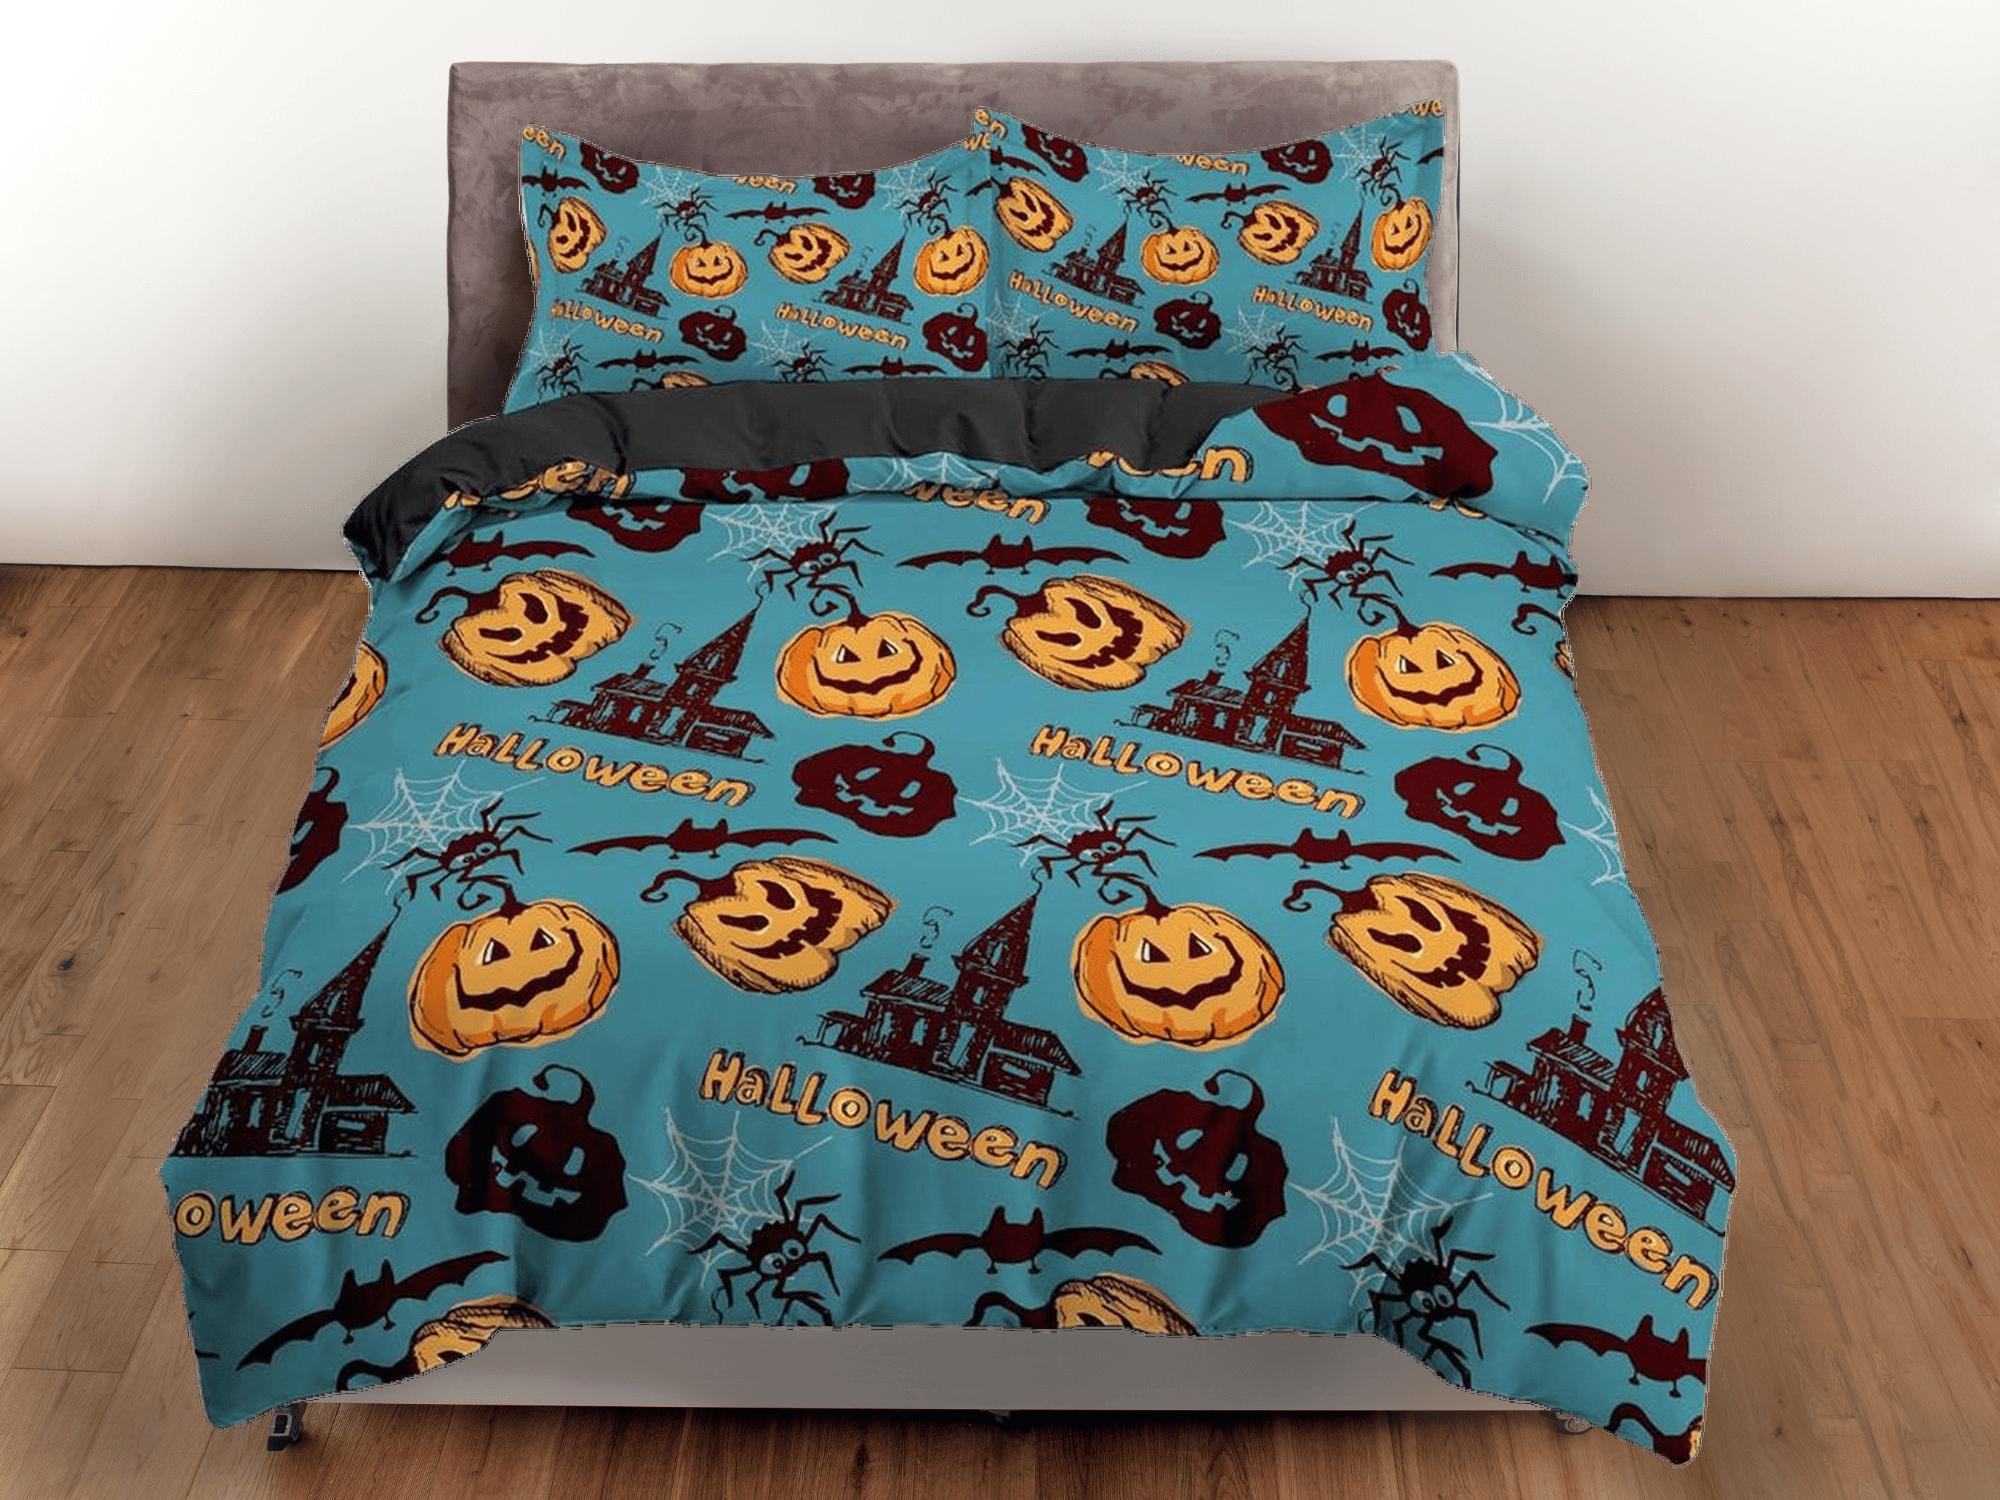 daintyduvet Vintage halloween stamps full bedding & pillowcase, sea green colored duvet cover set dorm bedding, nursery toddler bedding, halloween gift